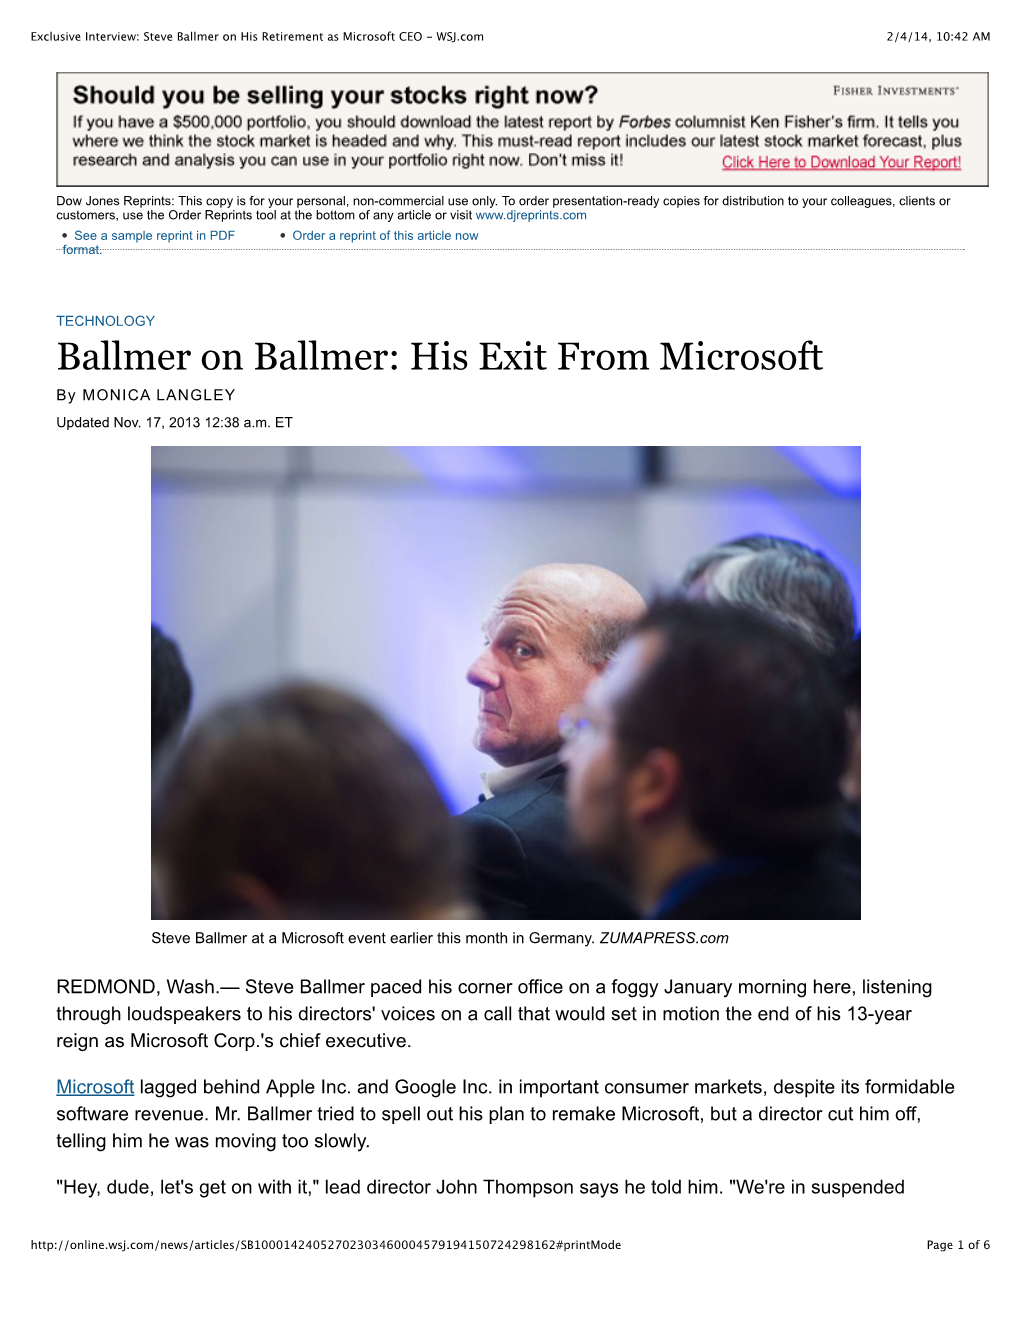 Steve Ballmer on His Retirement As Microsoft CEO - WSJ.Com 2/4/14, 10:42 AM